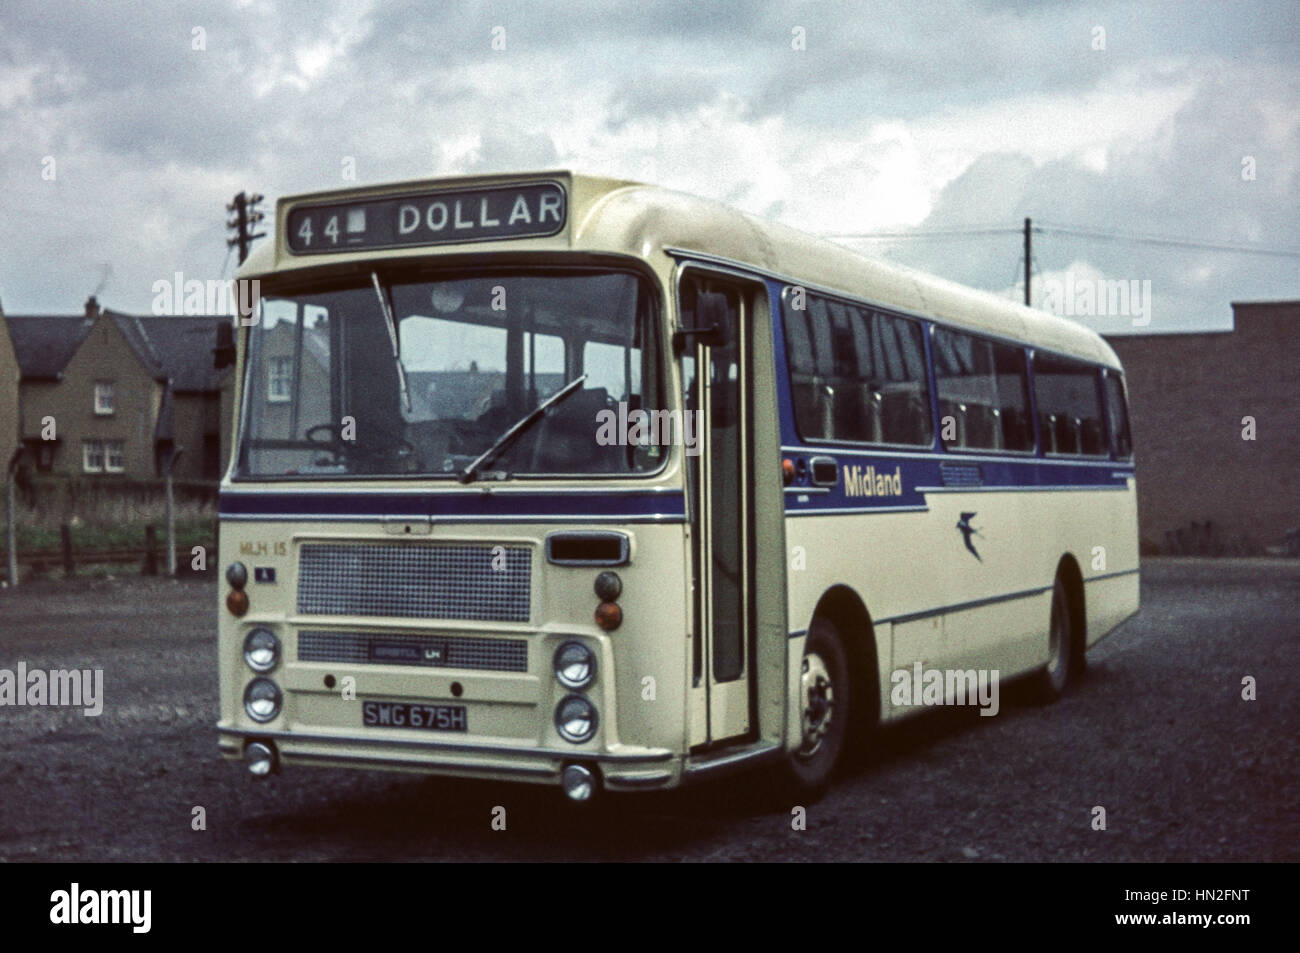 Edimburgo, Reino Unido - 1973: Vintage imagen de autobús en Edimburgo. Alexander Midland MLH 15 (registro SWG 675H). Foto de stock